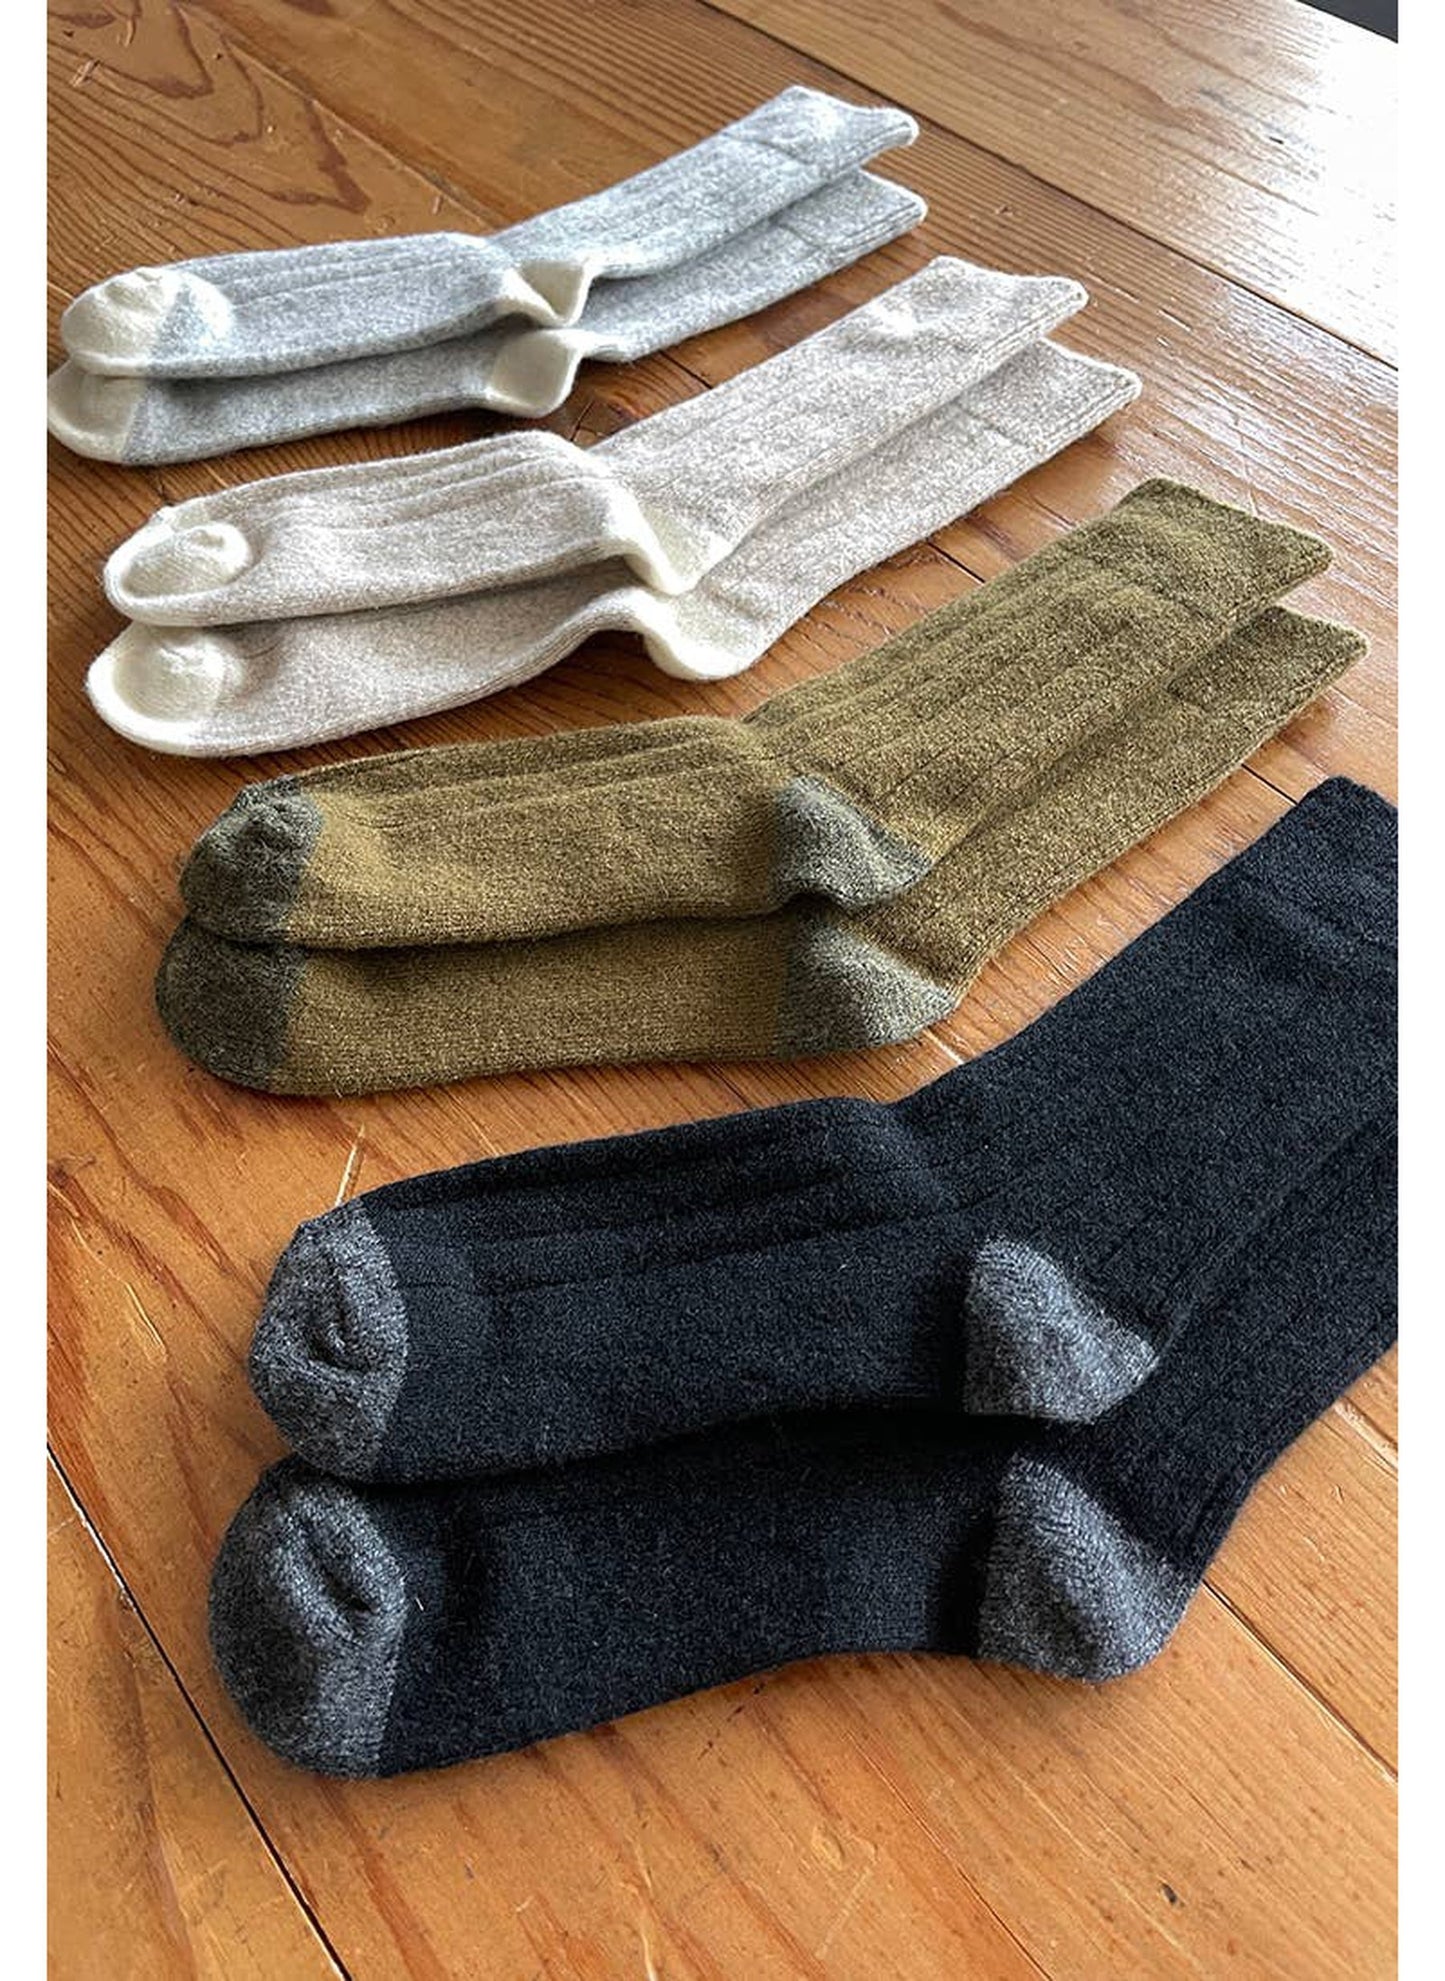 Le Bon Shoppe Classic Cashmere Socks - Fern